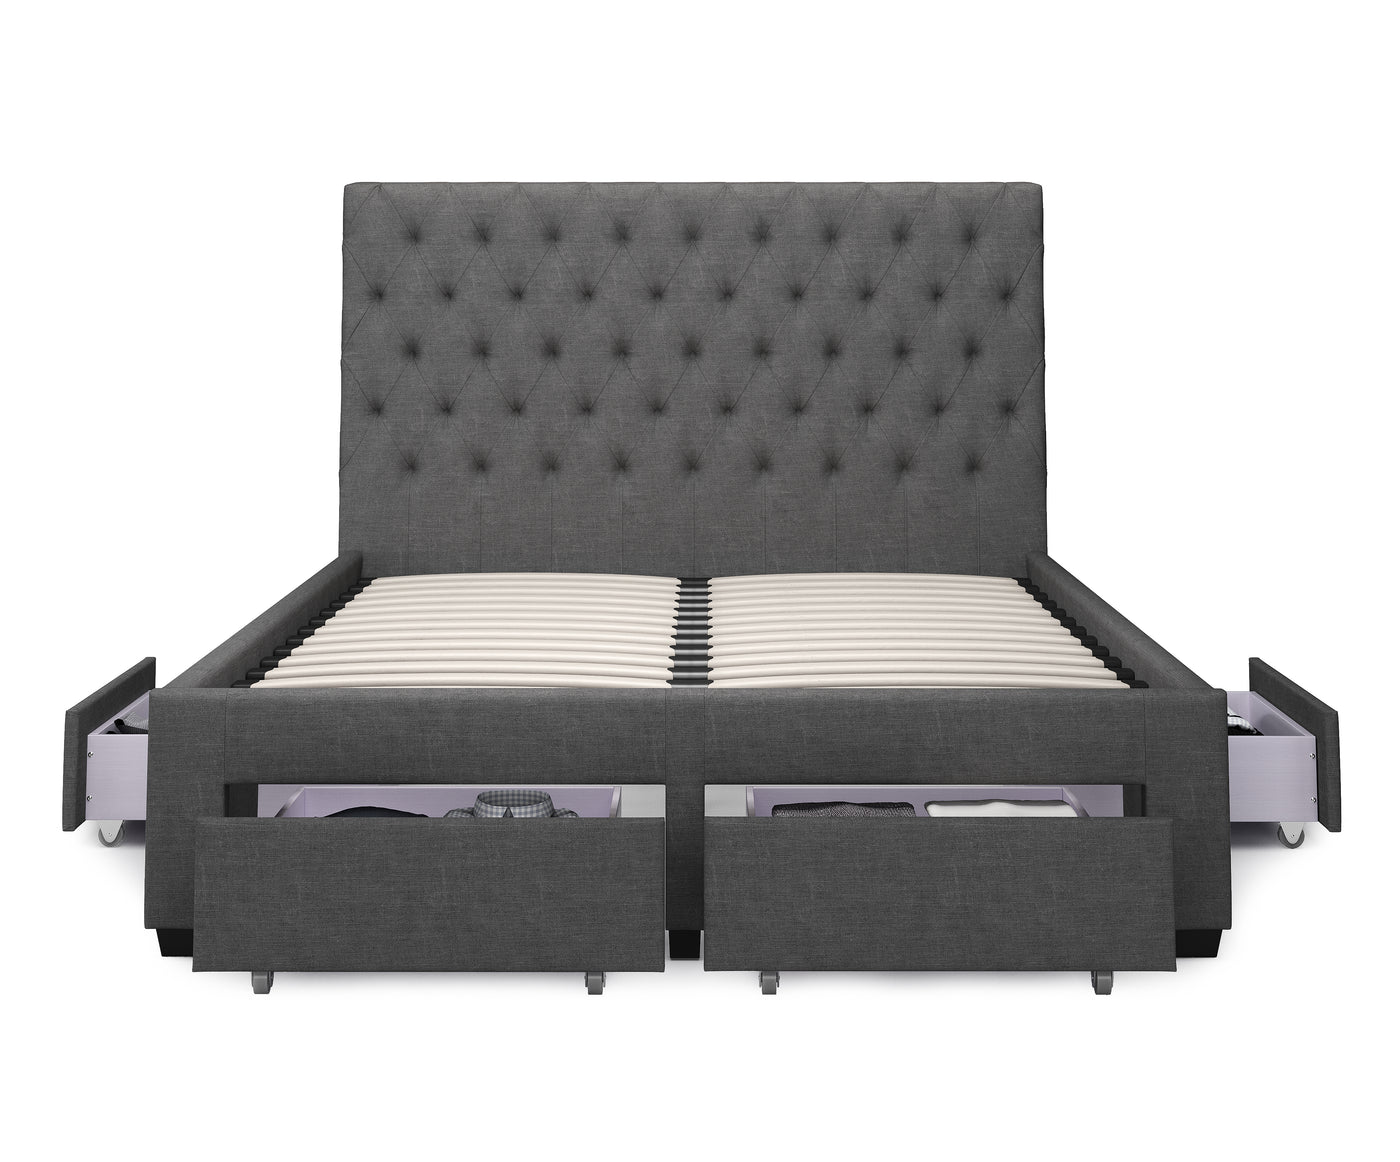 Zest 4 Drawer Storage Bed Frame (Grey Fabric) and Windsor Latex Pocket Spring Mattress Combo Deal (7847365378302)